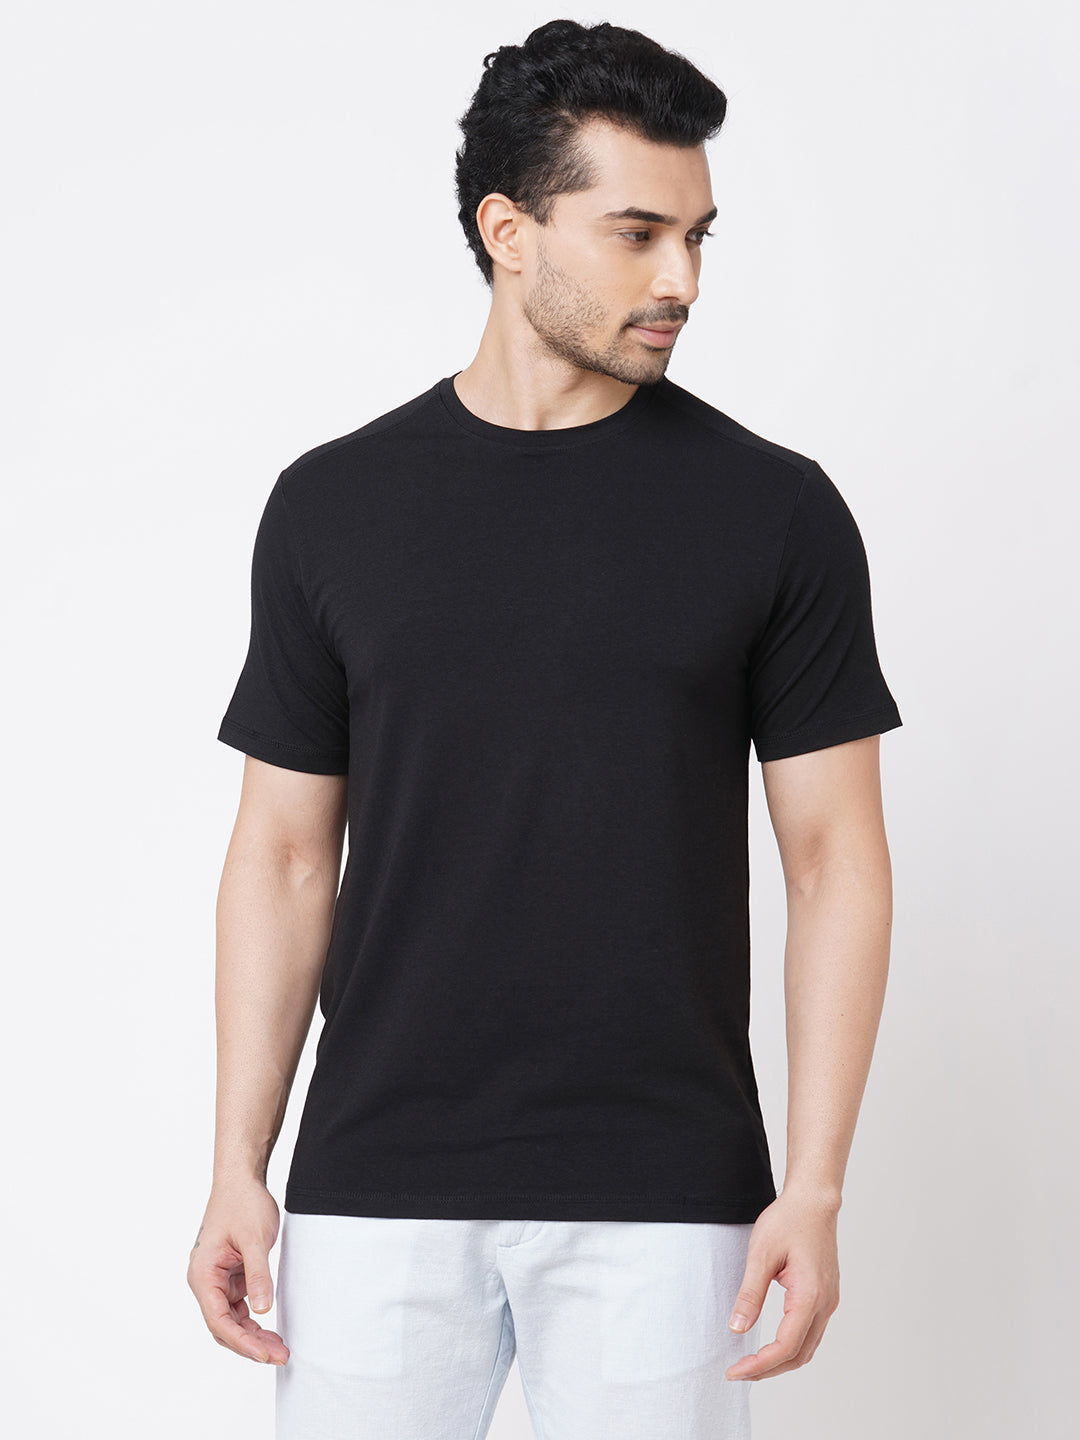 Men's Black Cotton Bamboo Elastane Regular Fit Tshirt